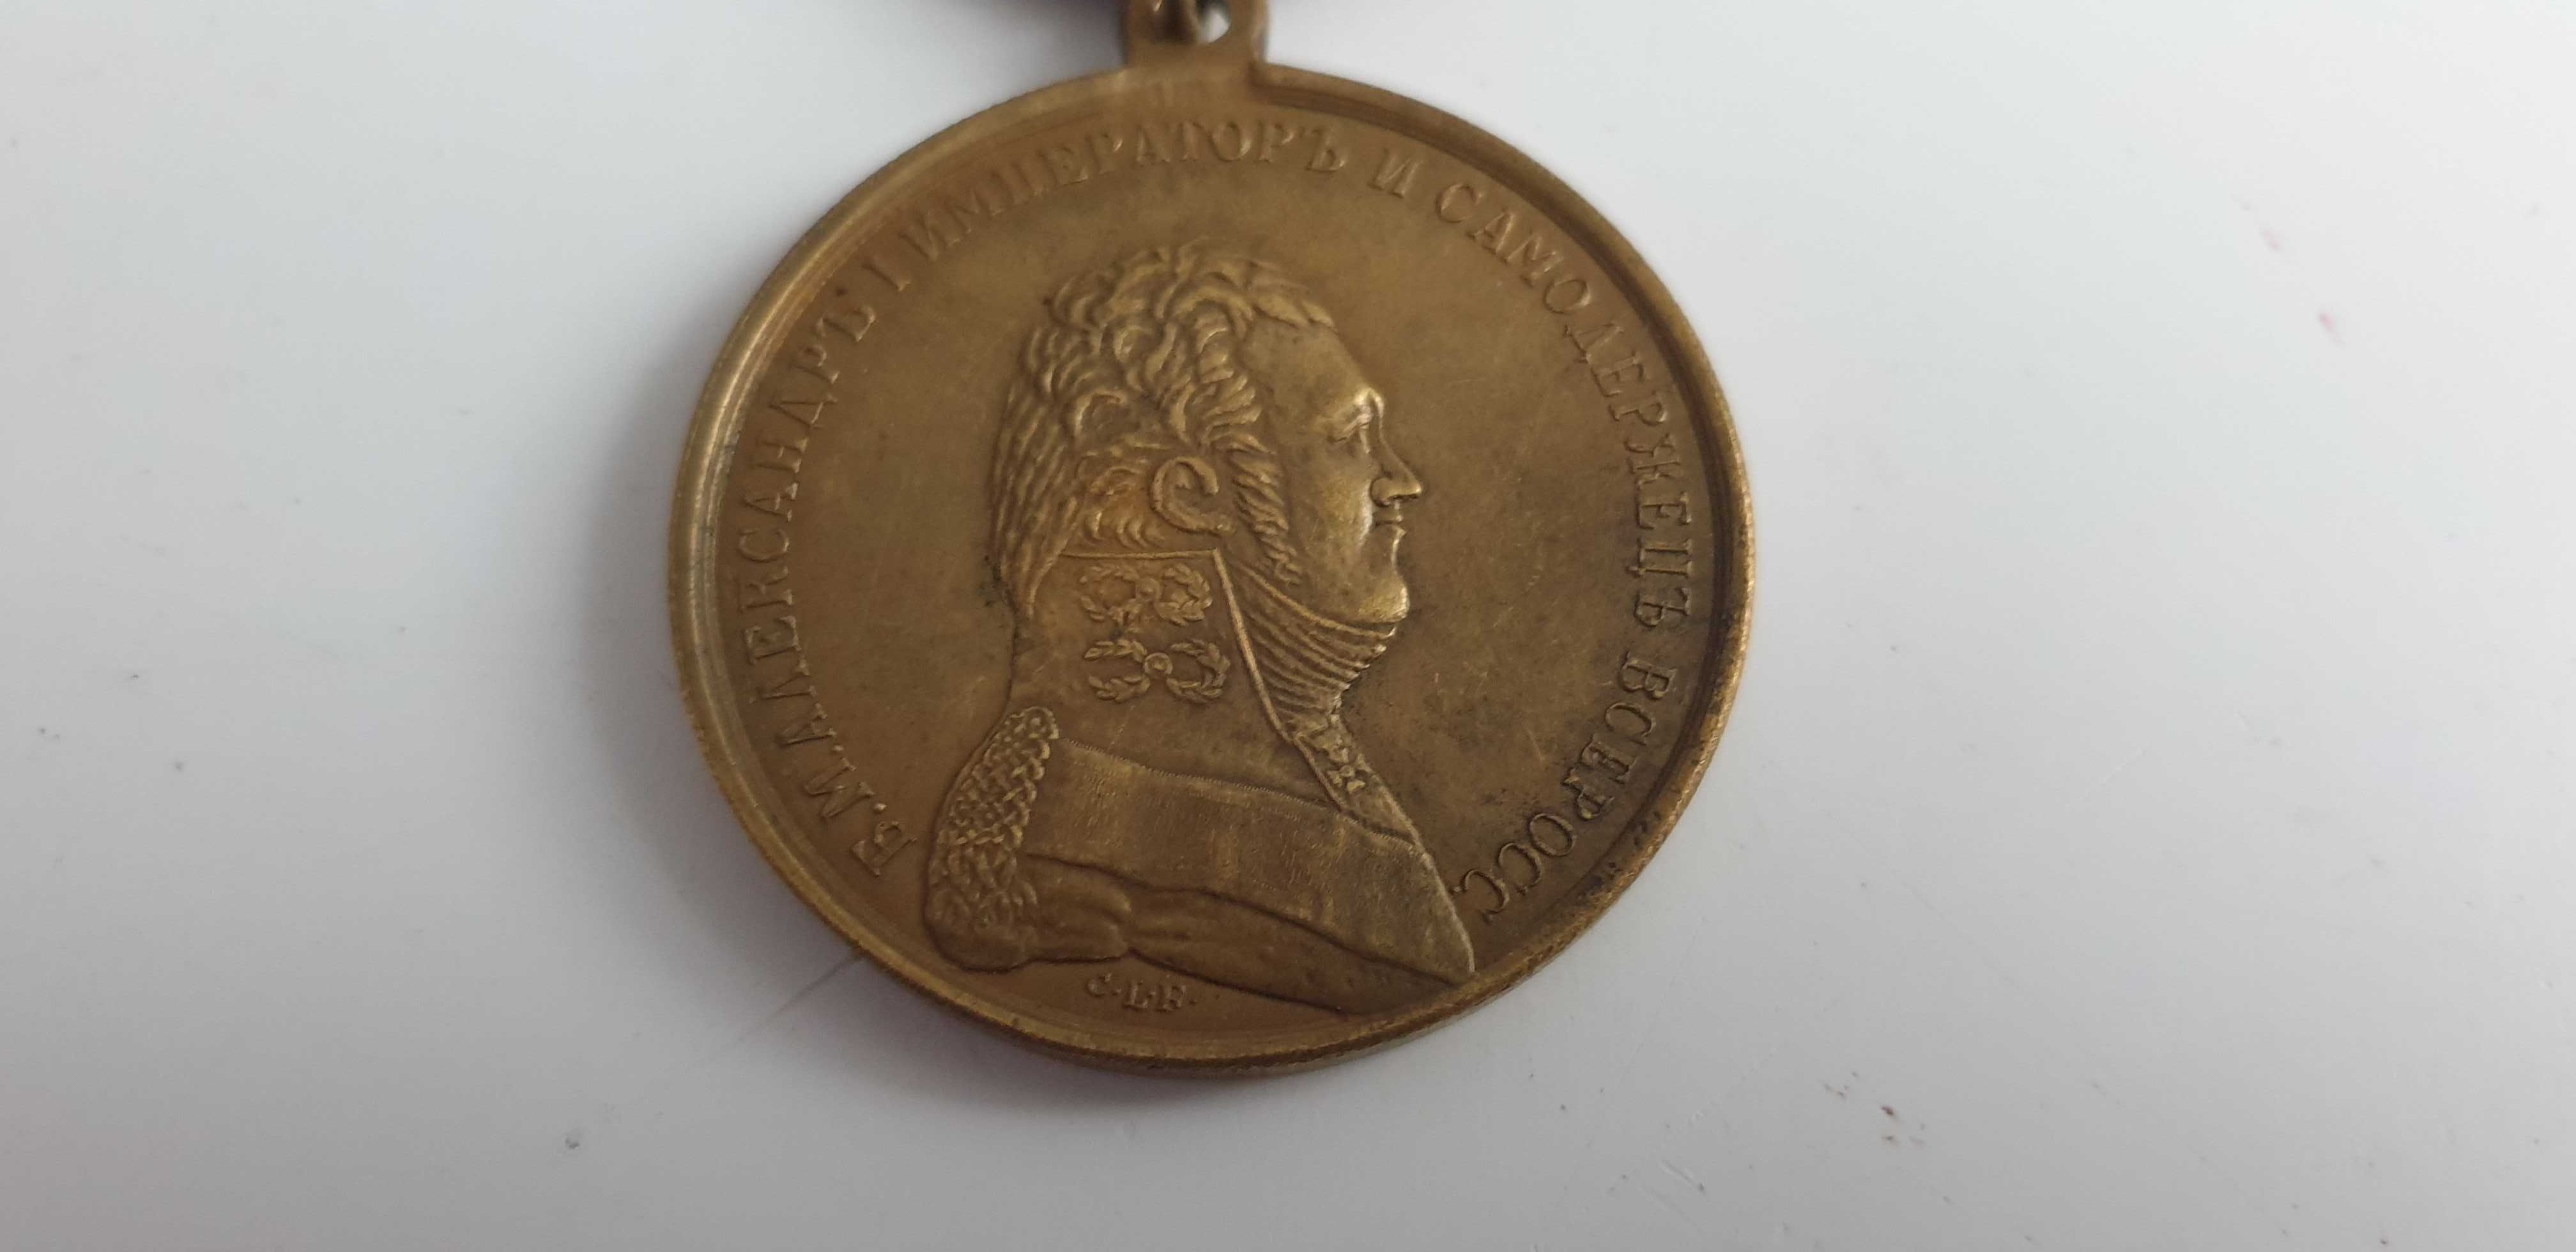 Starocie z Gdyni - Militaria - medal grawerski